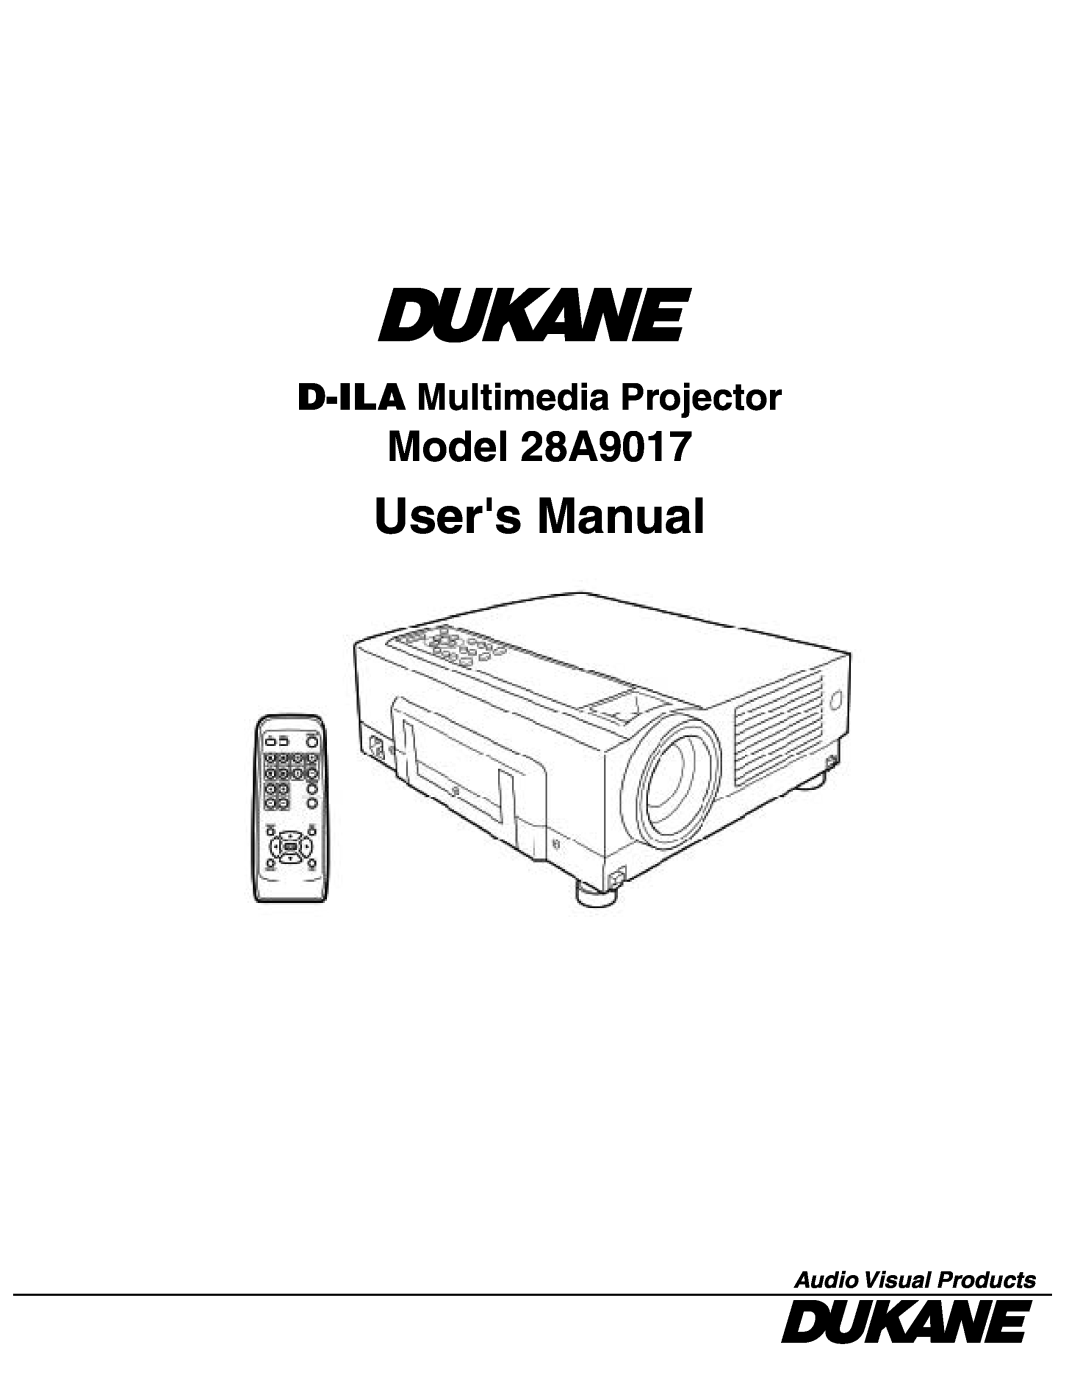 Dukane user manual Model 28A9017, Users Manual, D-ILA Multimedia Projector, Audio Visual Products 